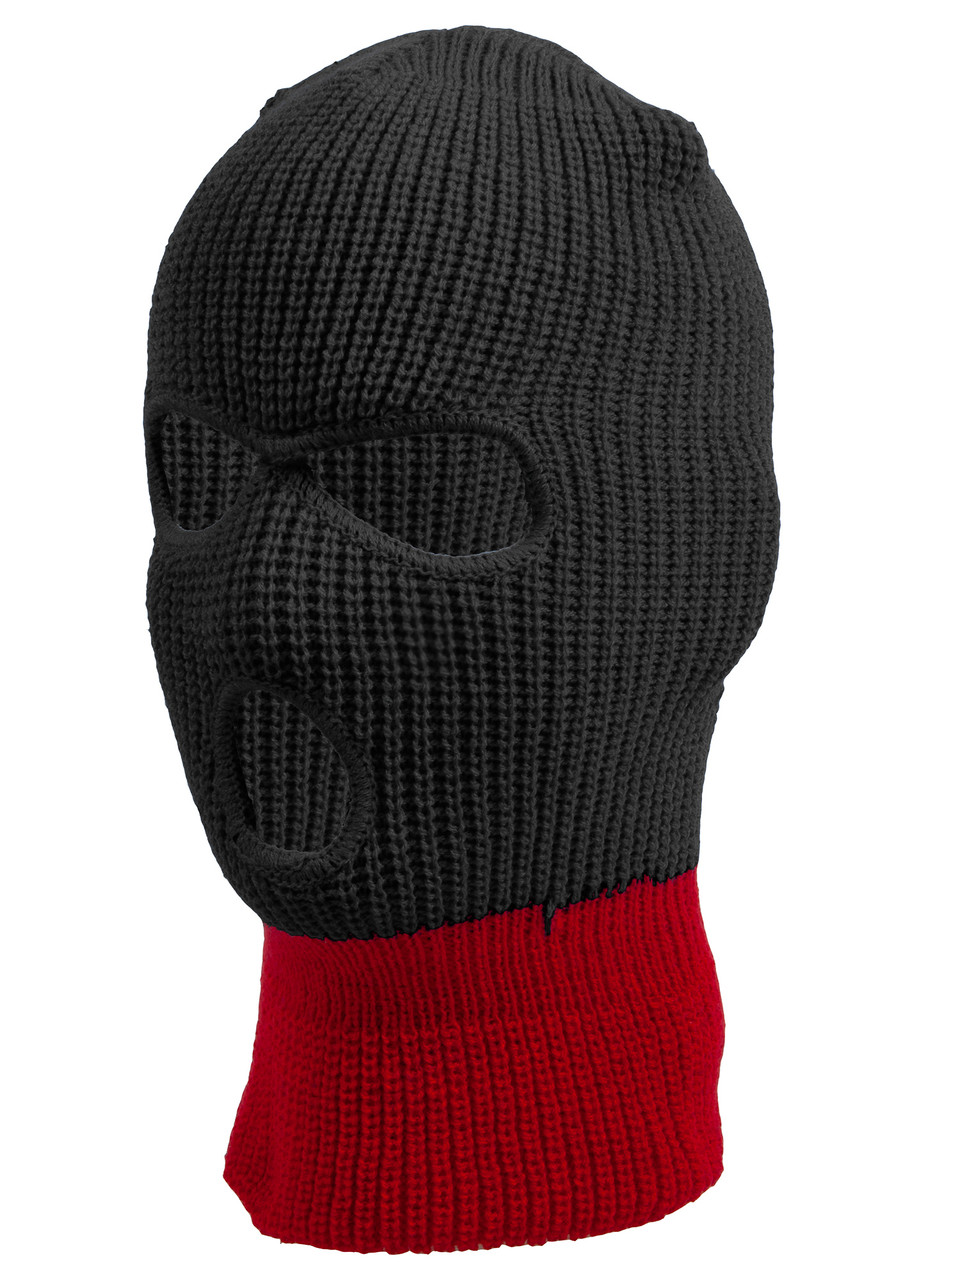 TopHeadwear One 1 Hole Ski Mask - Black 